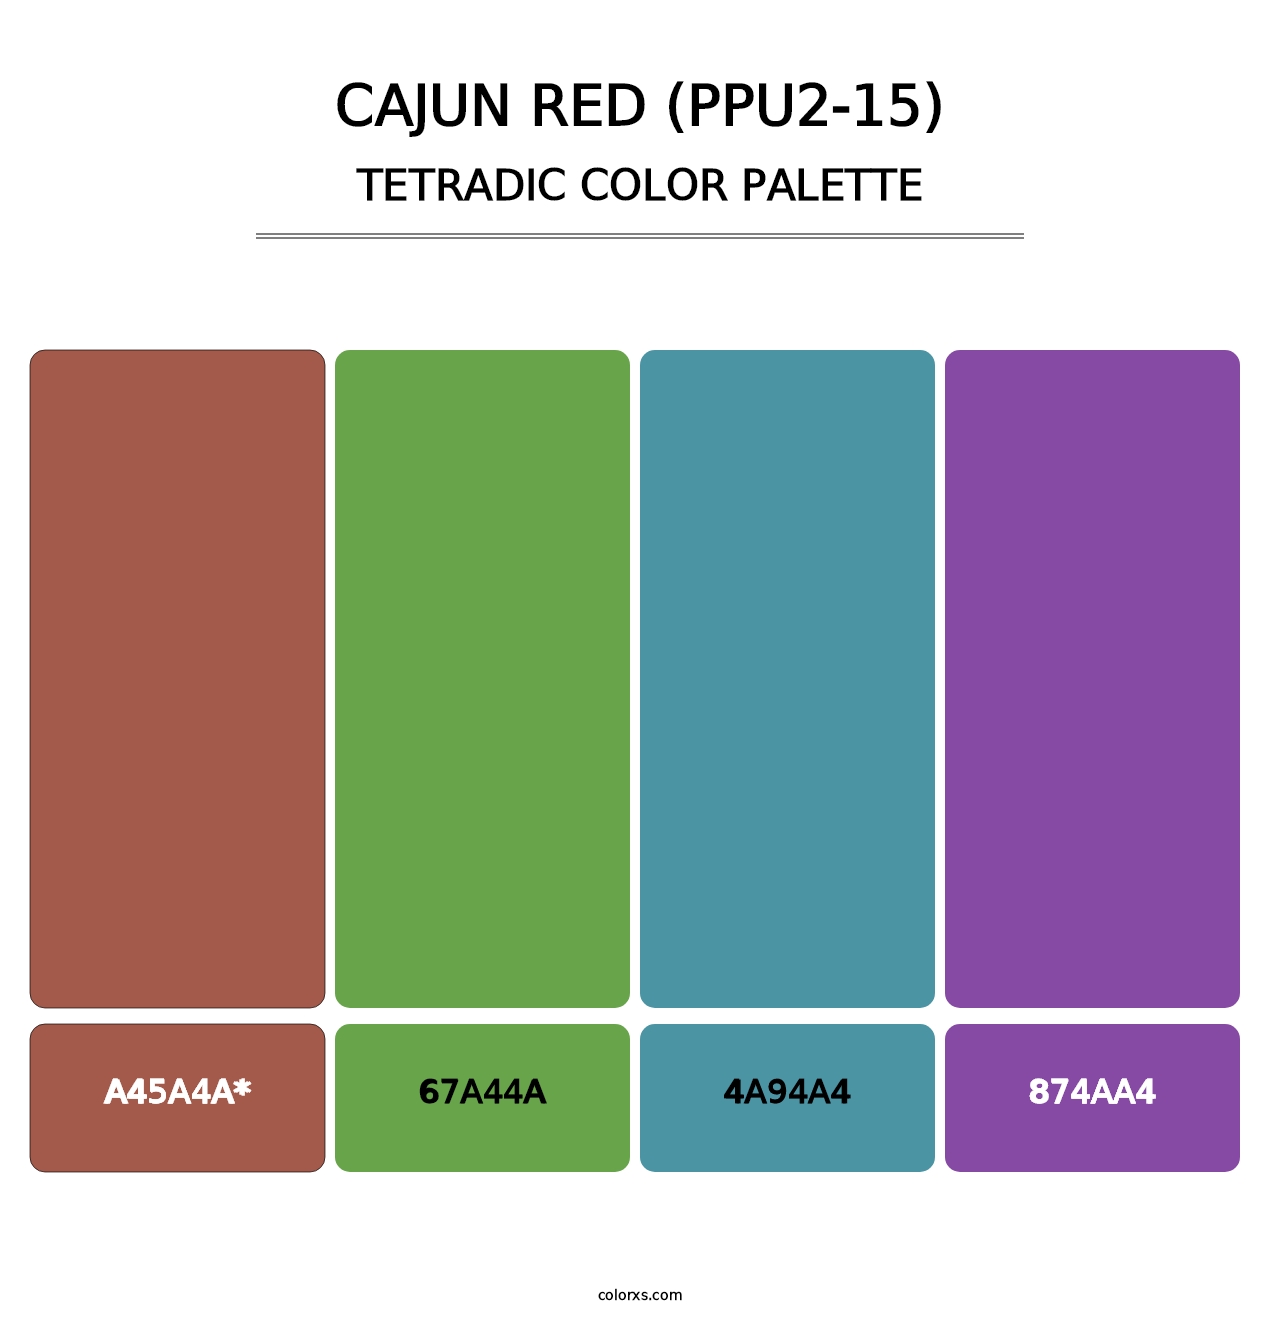 Cajun Red (PPU2-15) - Tetradic Color Palette